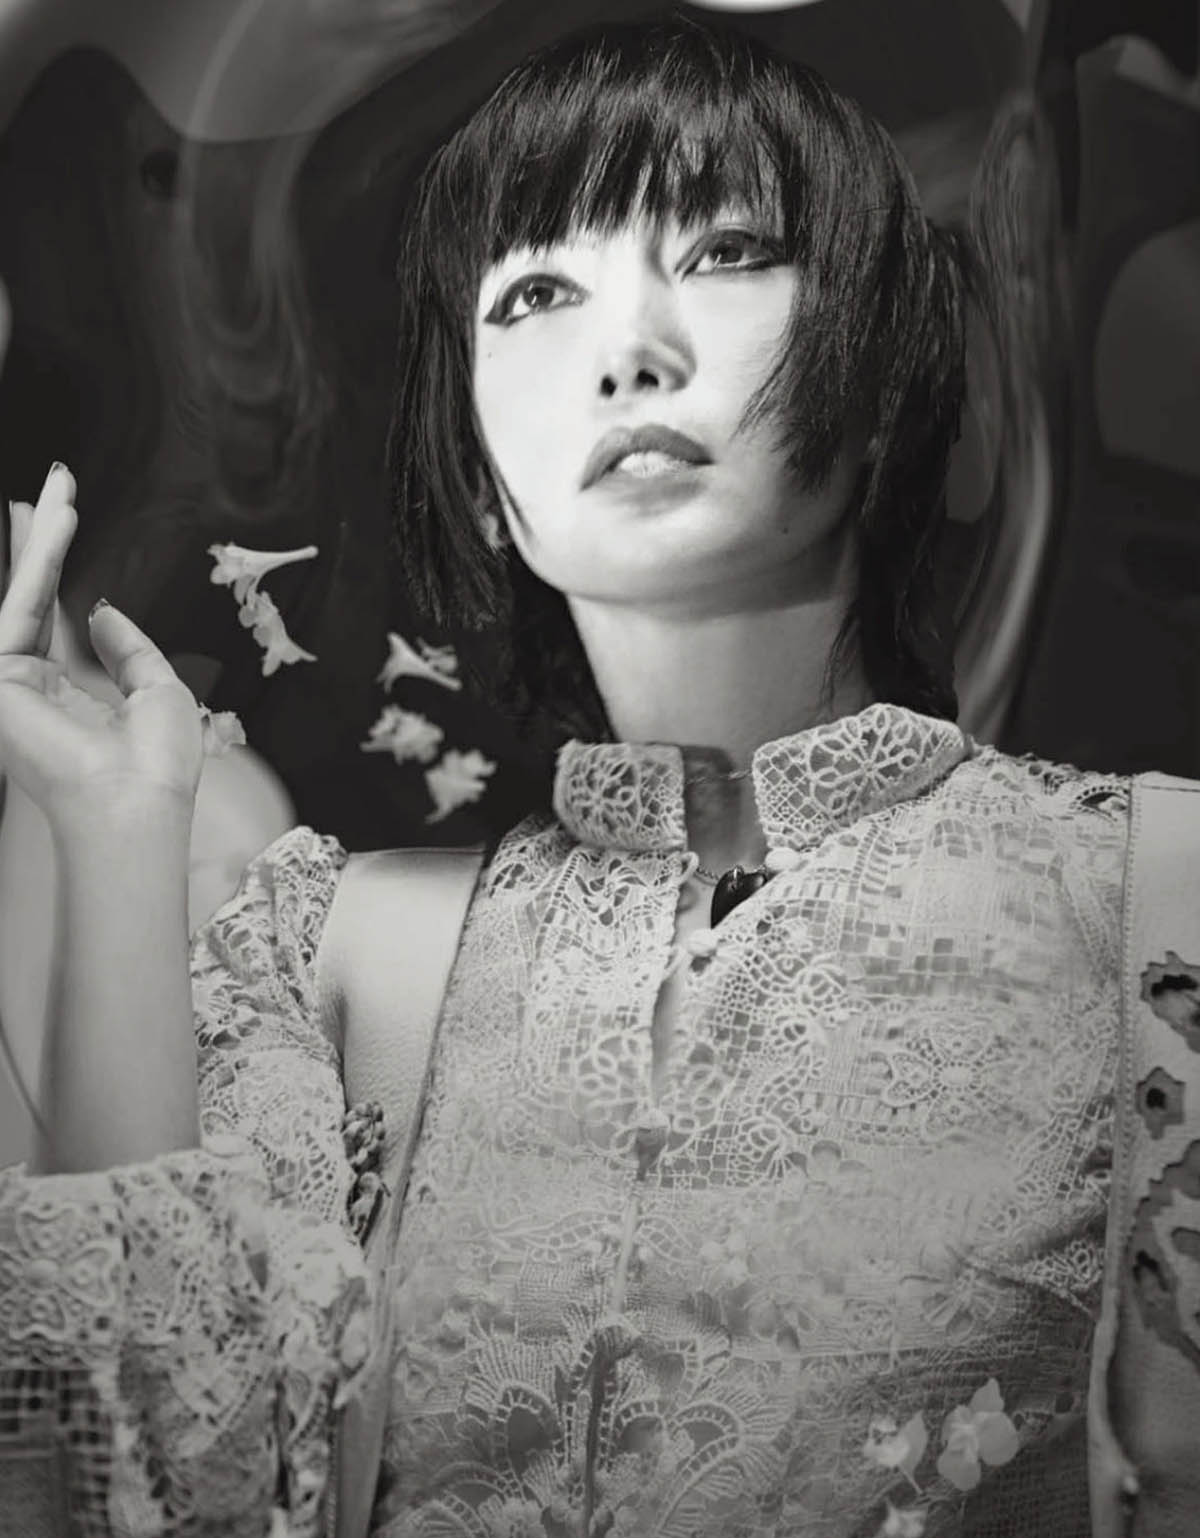 Li Bingbing covers Vogue China April 2021 by Chen Man